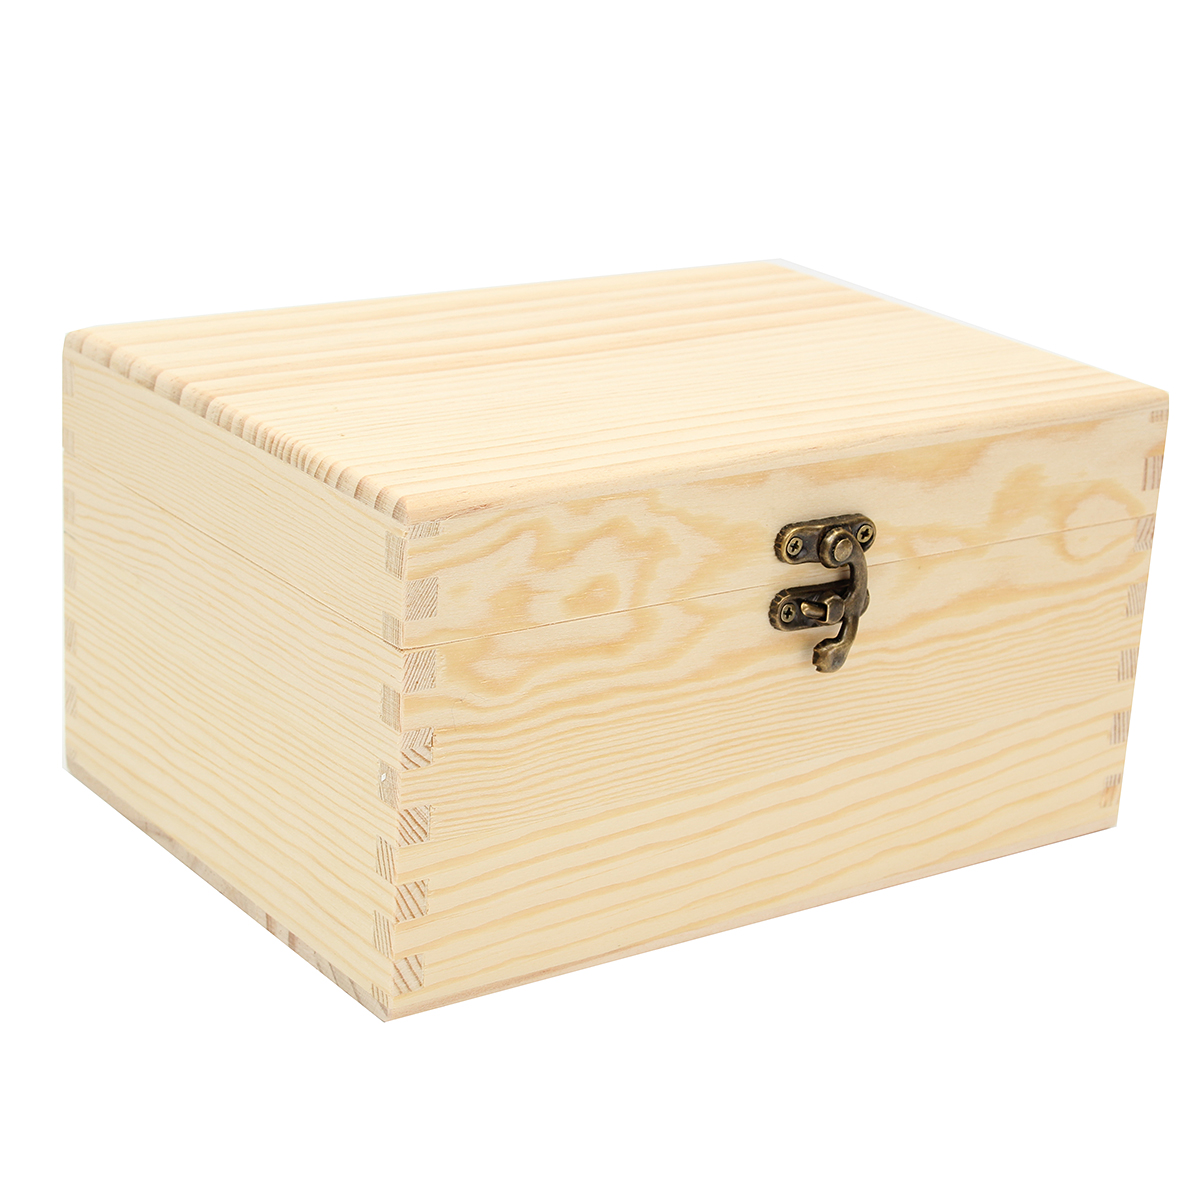 15-Grids-Natural-Wood-Box-Essential-Oils-Storage-Anti-evaporation-Box-Case-1116403